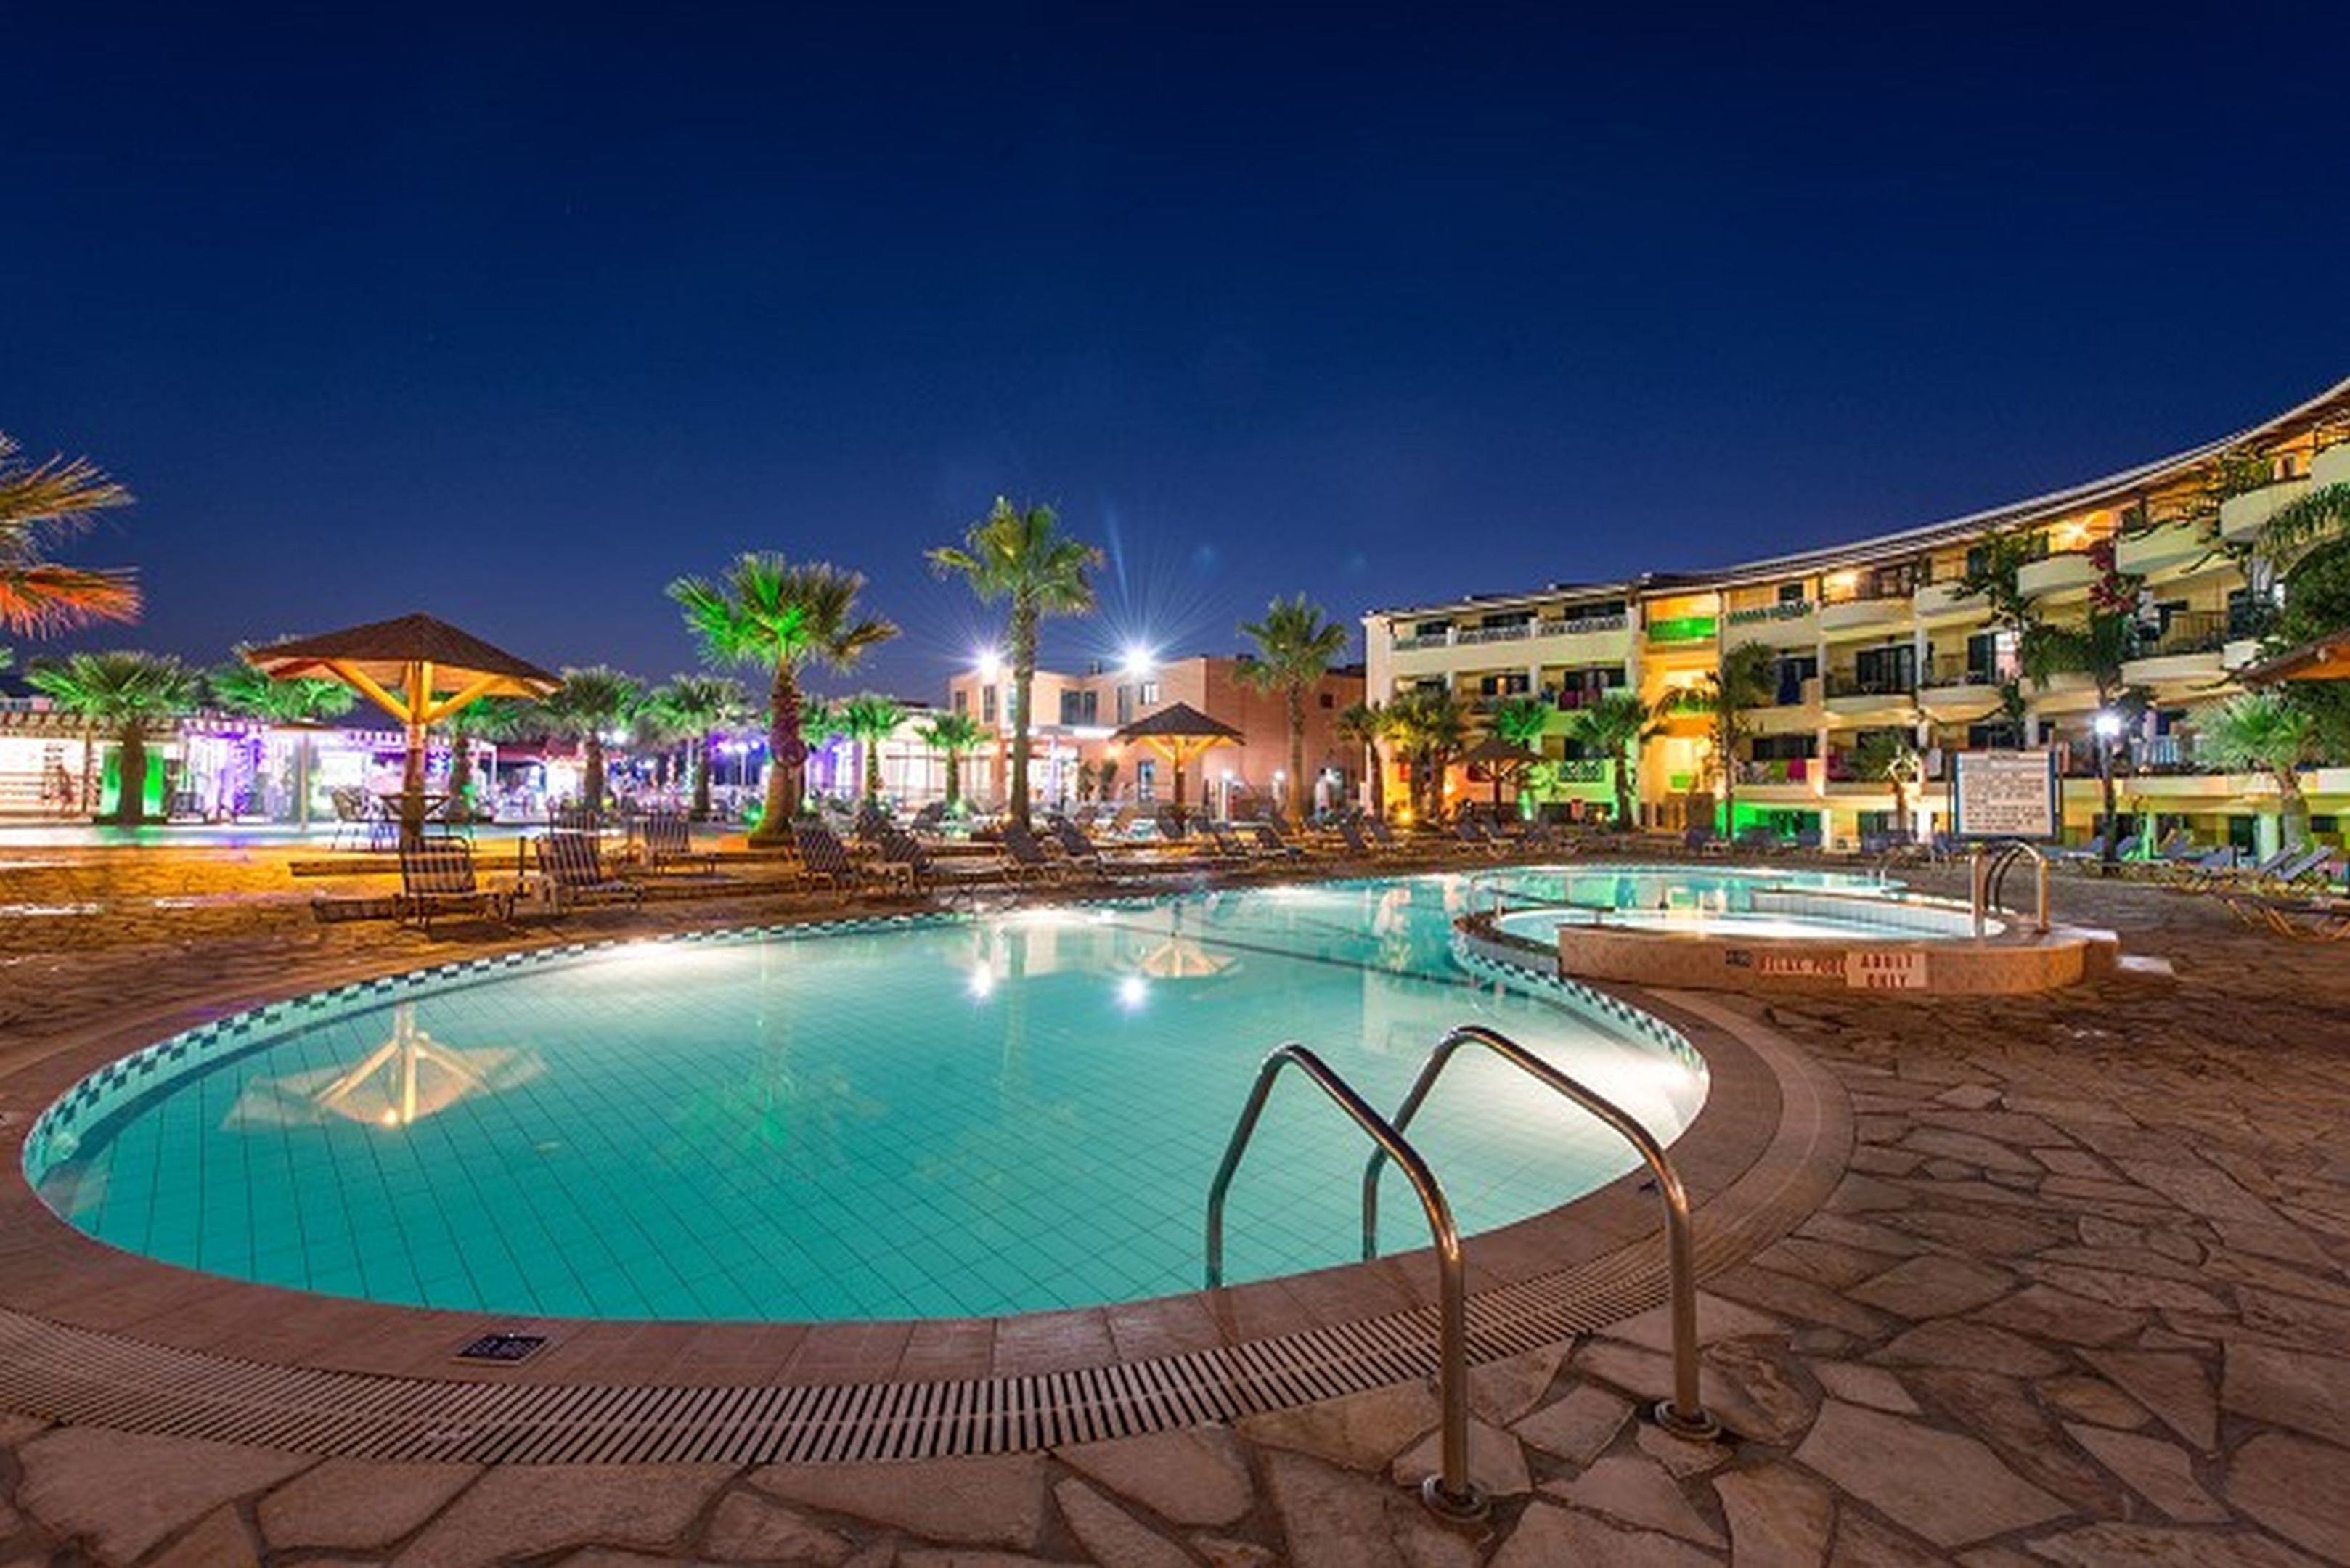 Caretta Beach Holiday Village & Hotel